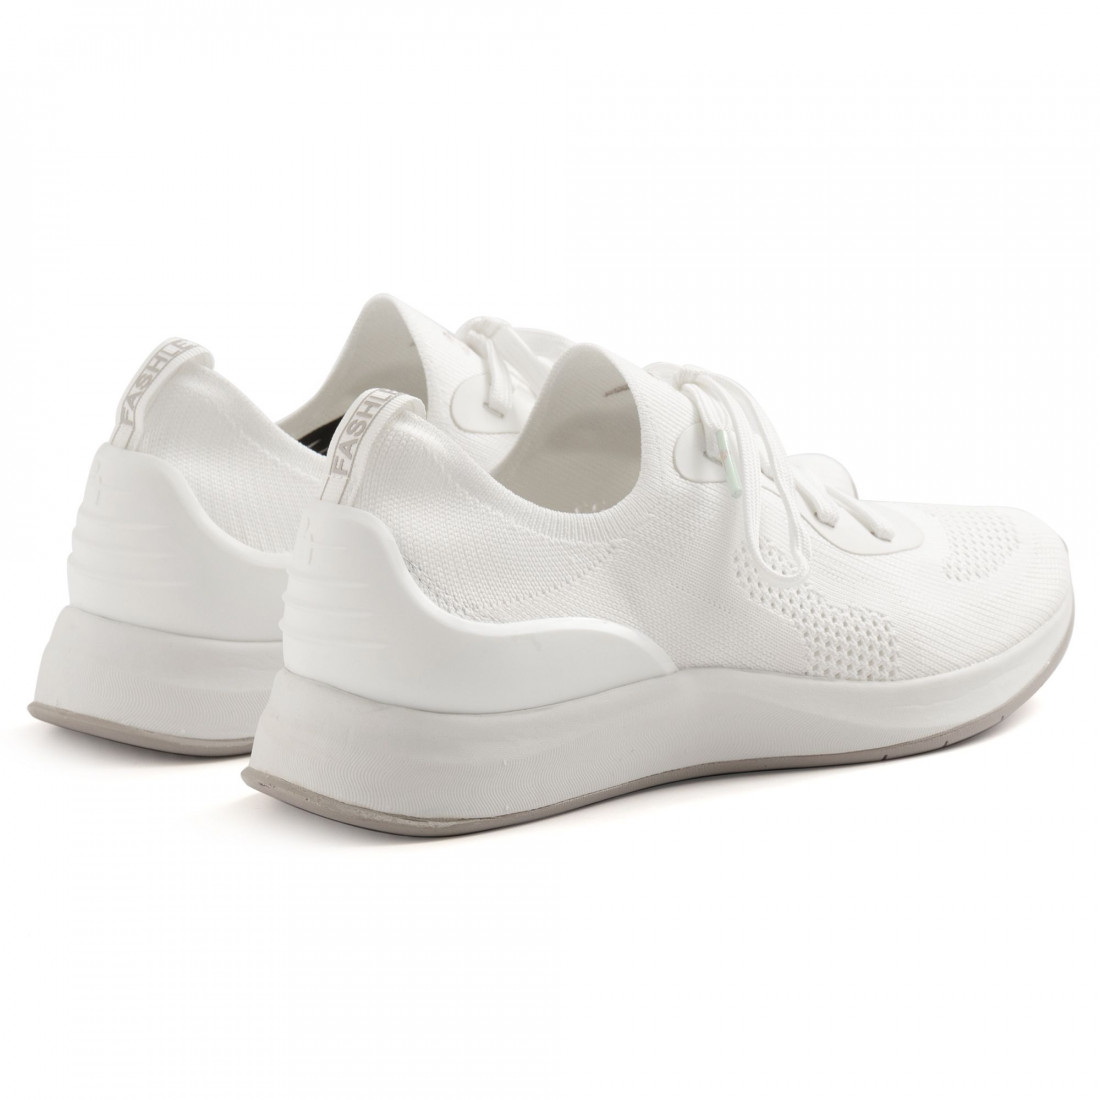 Women's Tamaris Fashletics white sneakers